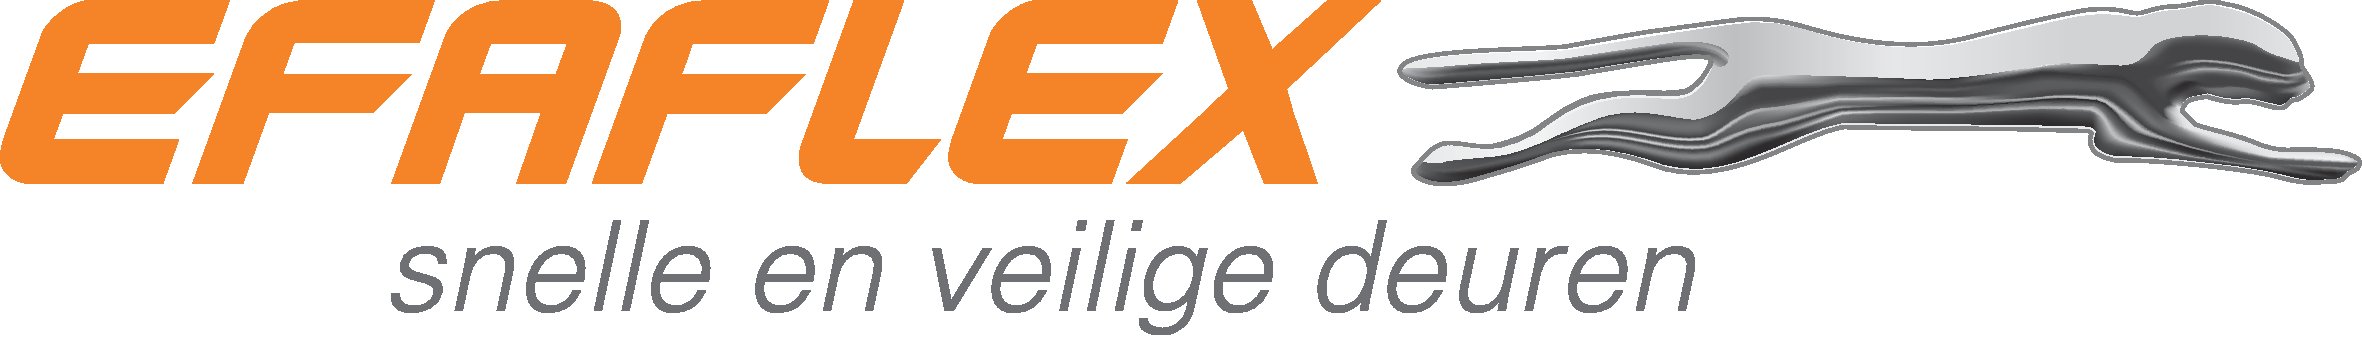 EFAFLEX - safe high-speed doors